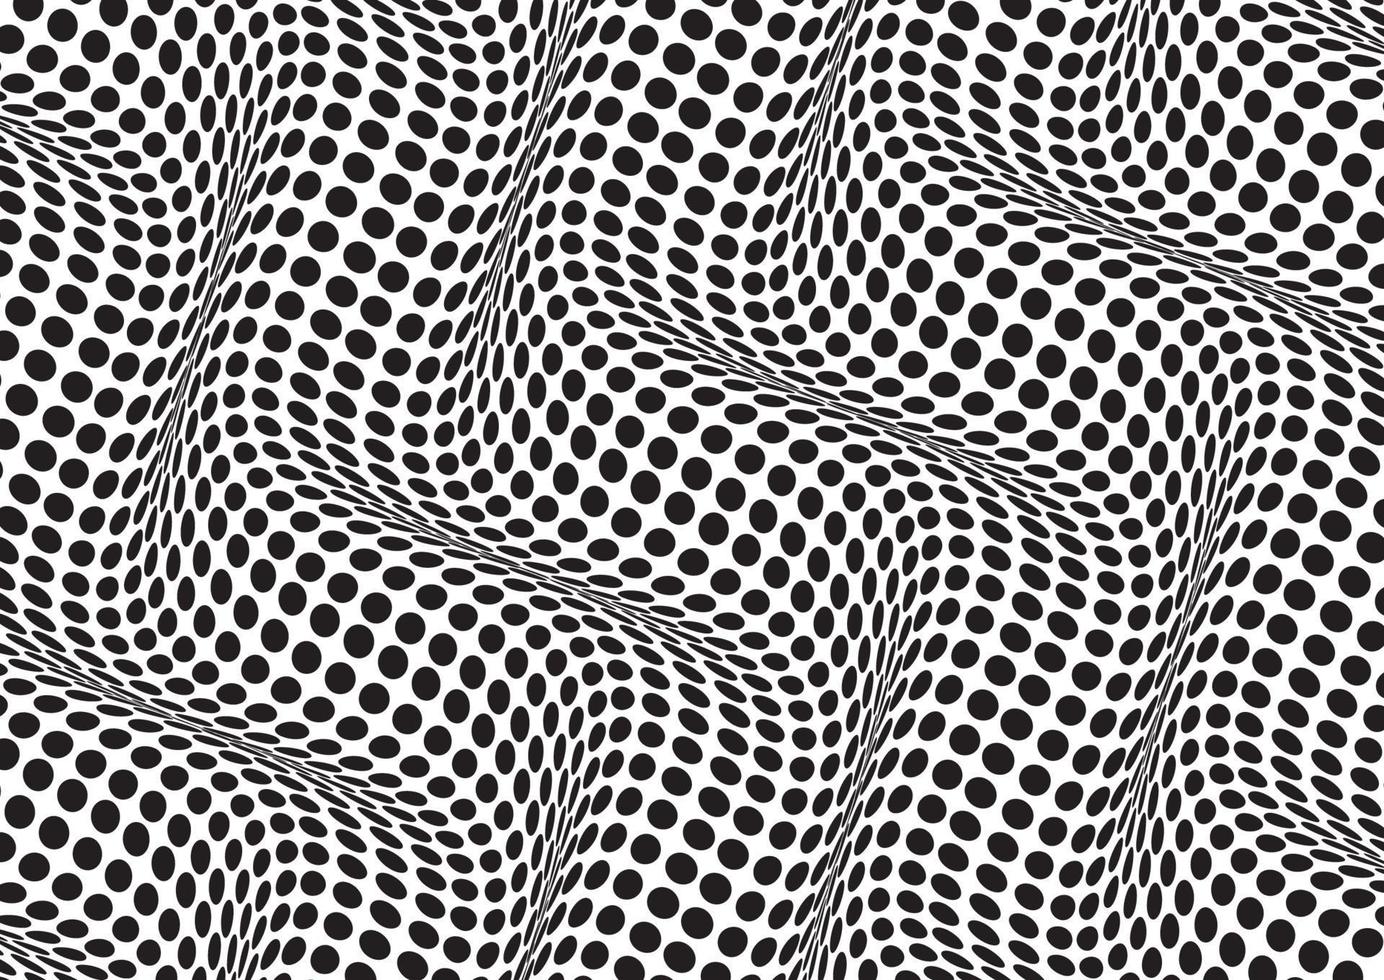 abstrakt bakgrund med en svartvit optisk illusion vektor